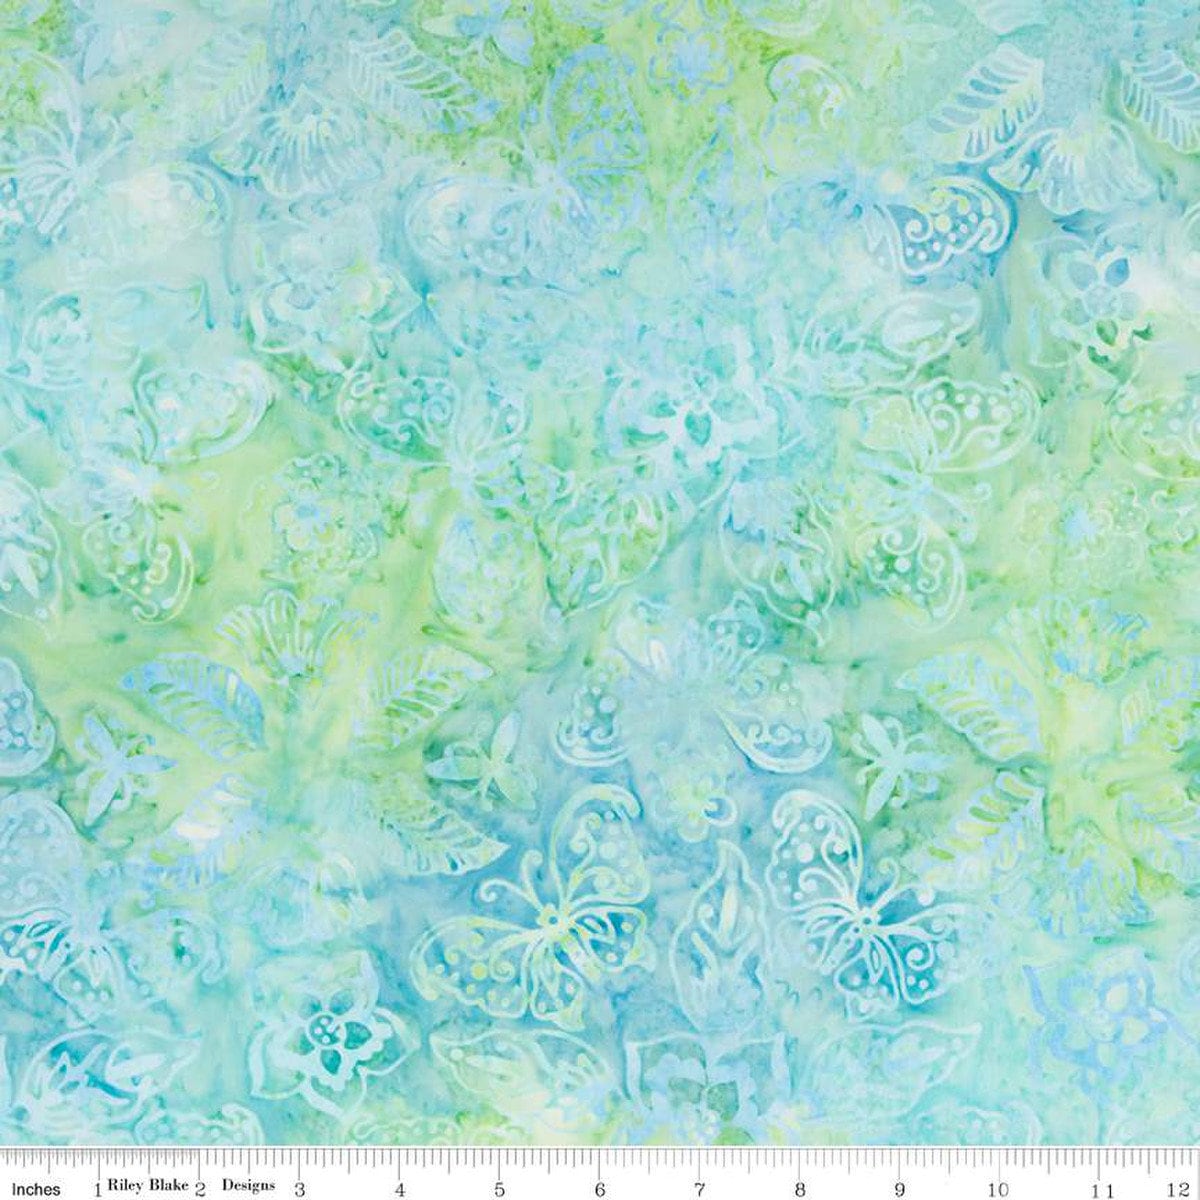 Expressions Batiks Tjaps Water Blue Green Batik Fabric - Riley Blake Designs BTPT1097, Aqua Batik Fabric, Light Blue Batik By the Yard